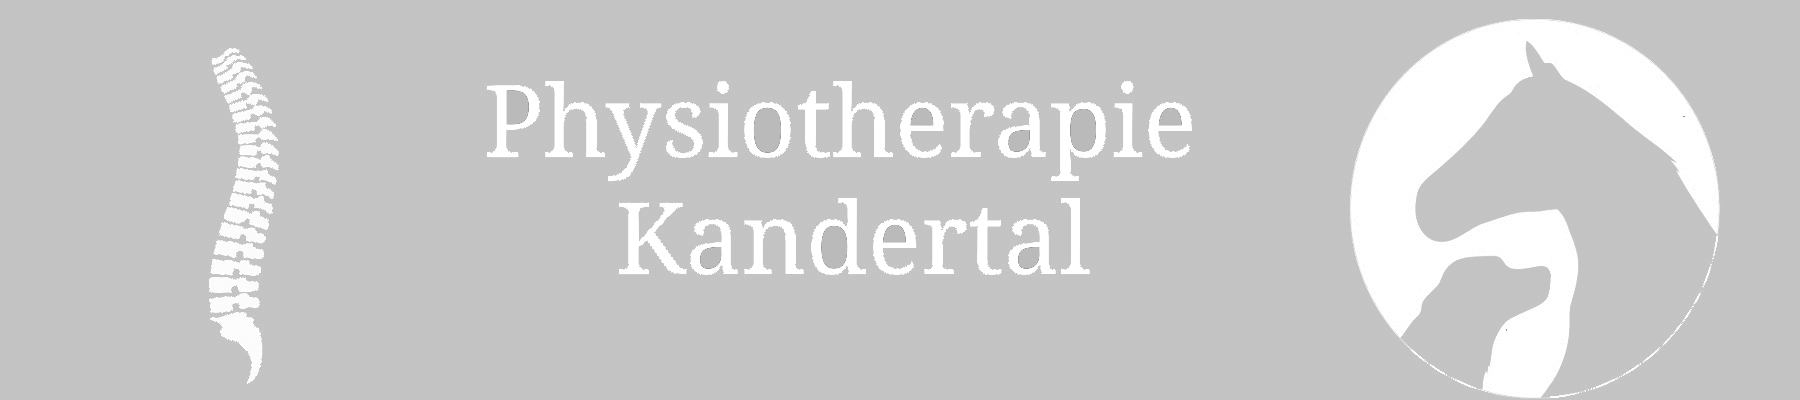 Physiotherapie Kandertal